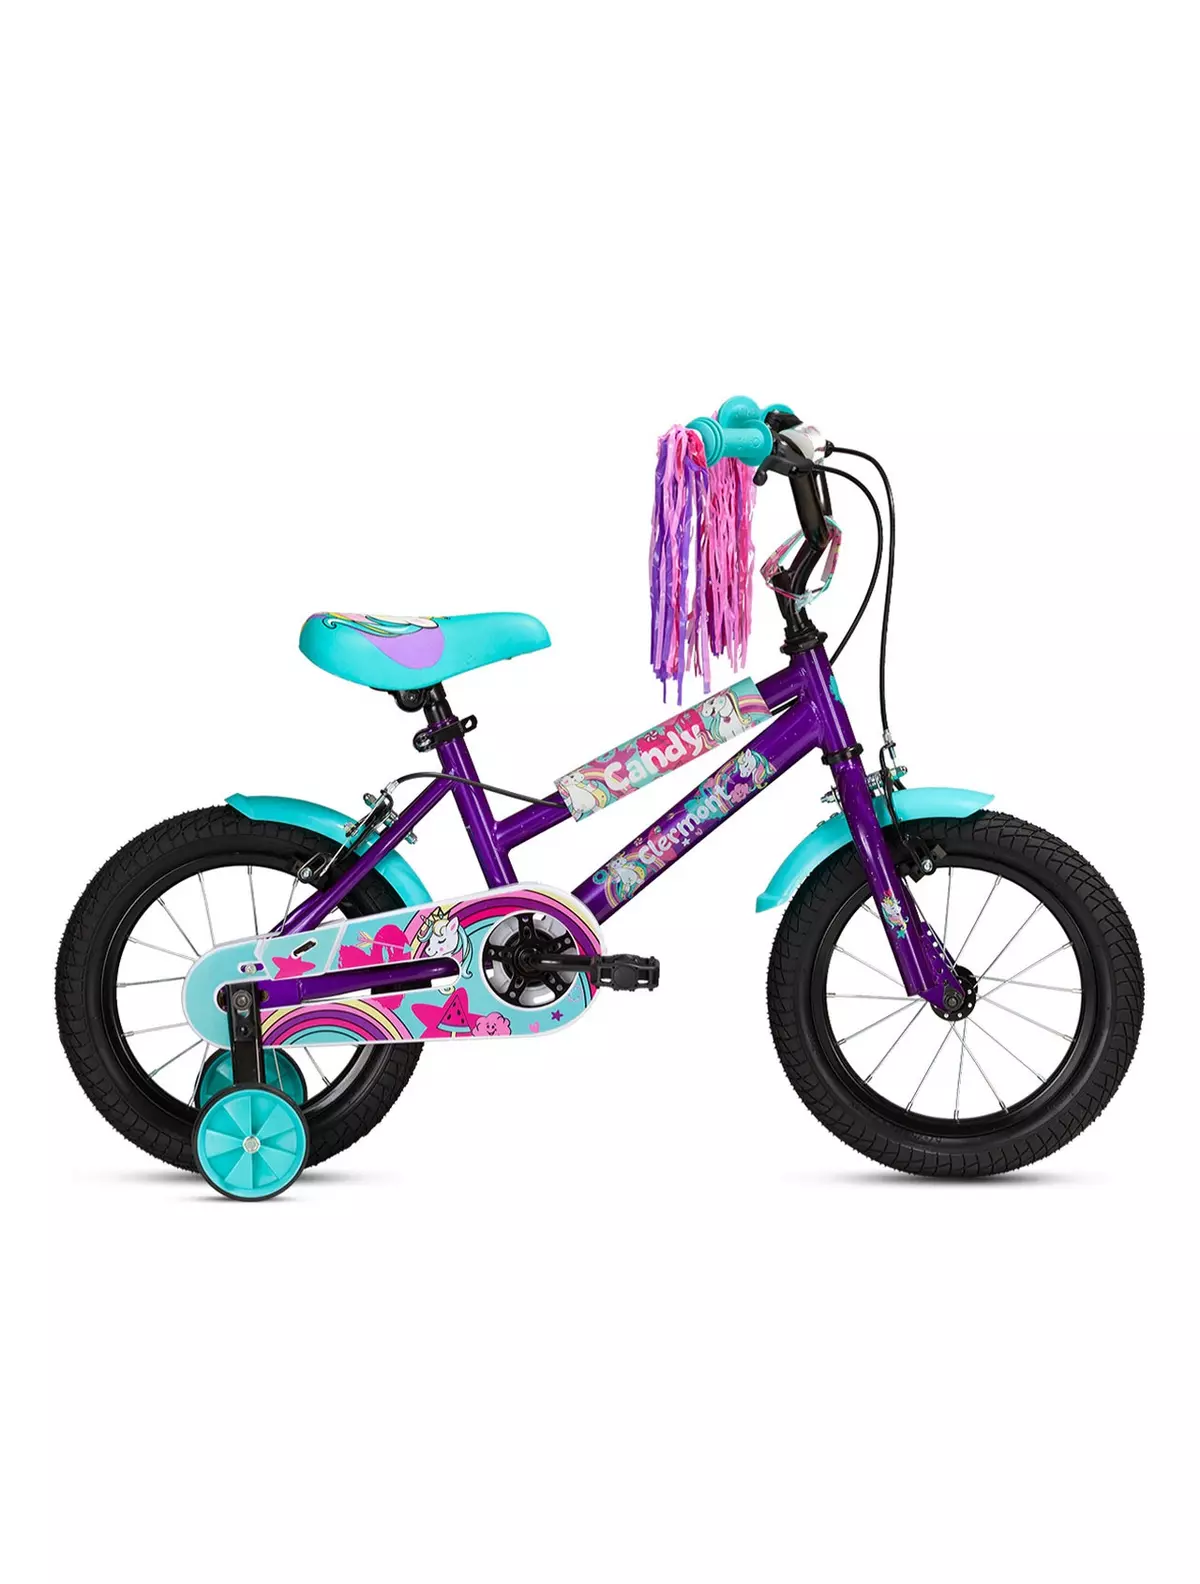 Bicicleta copii Clermont Candy 14  -Violet